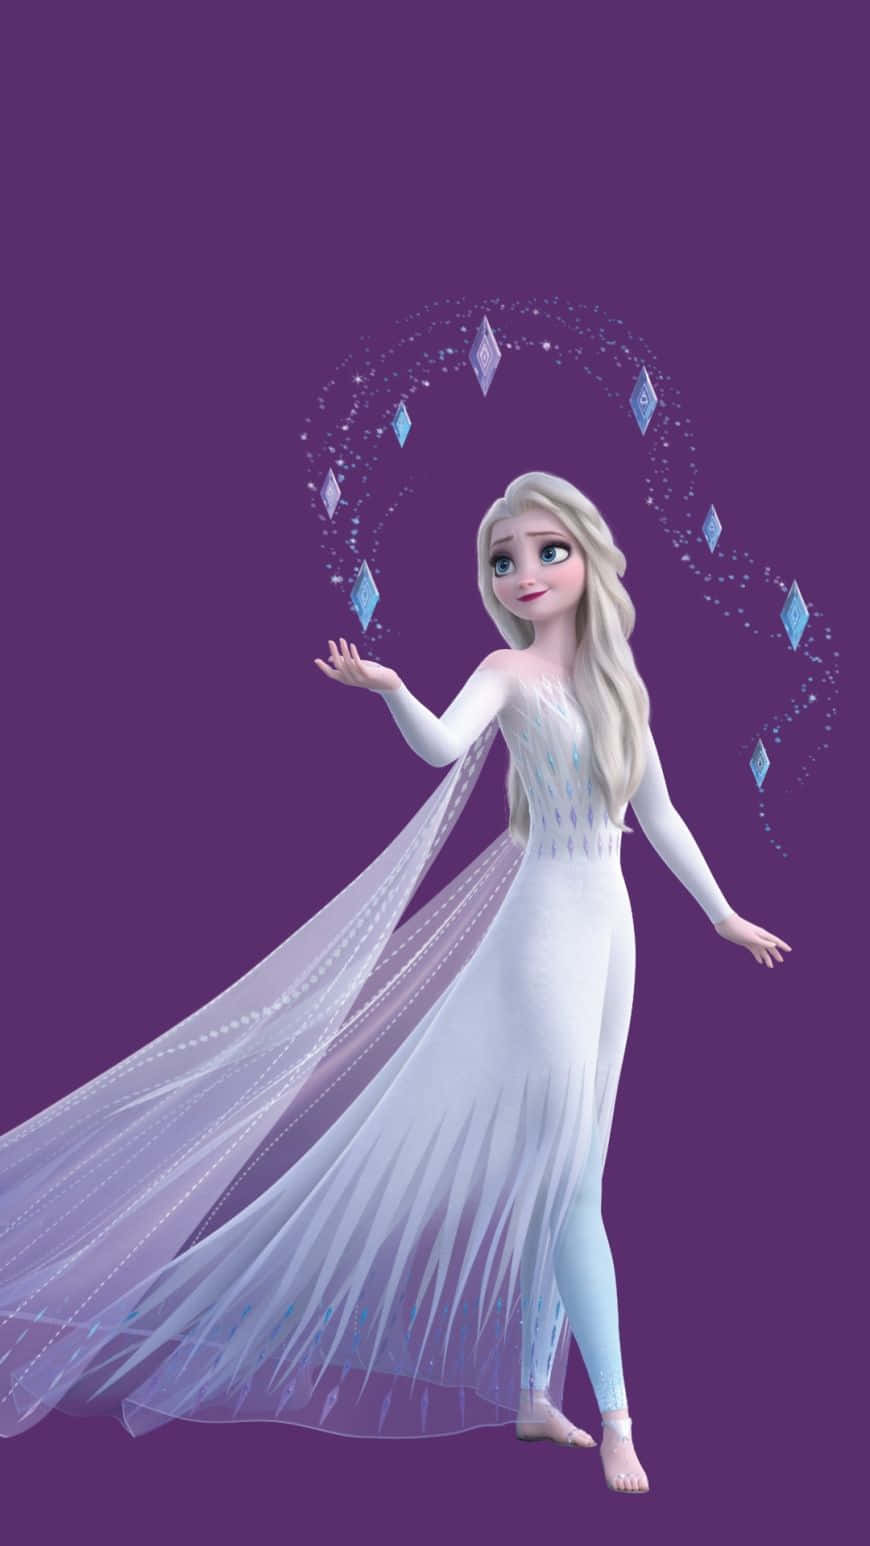 Anna's sister, Elsa, gorgeous in her gleaming white dress from Frozen 2 Wallpaper